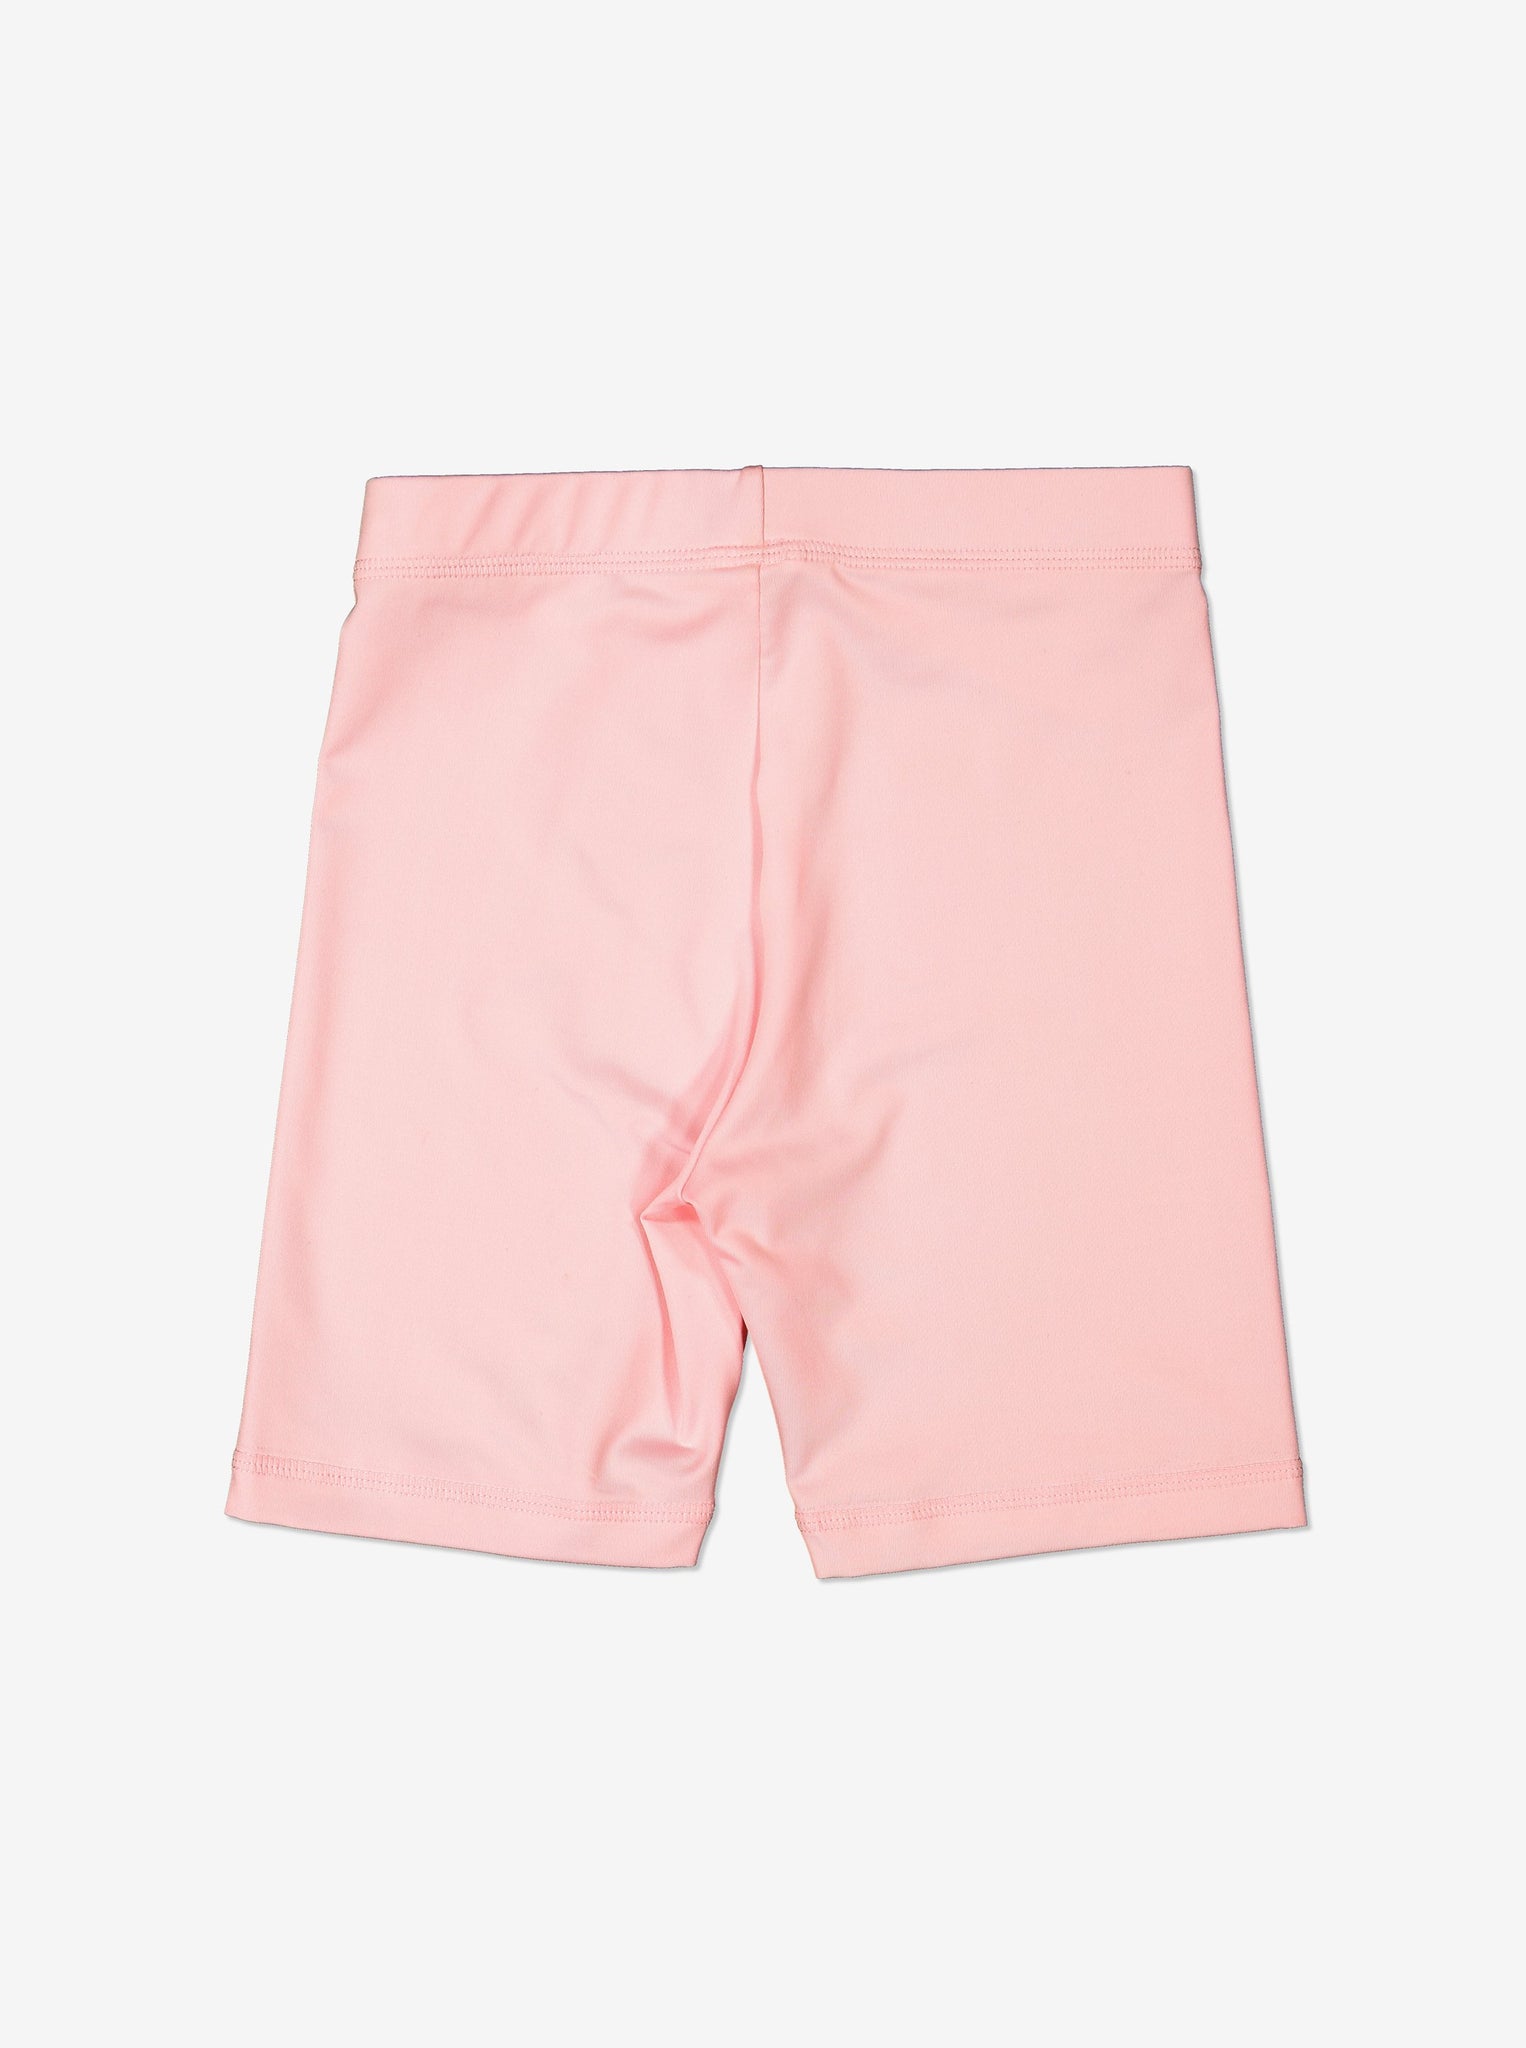 UV Kids Pink Swim Shorts